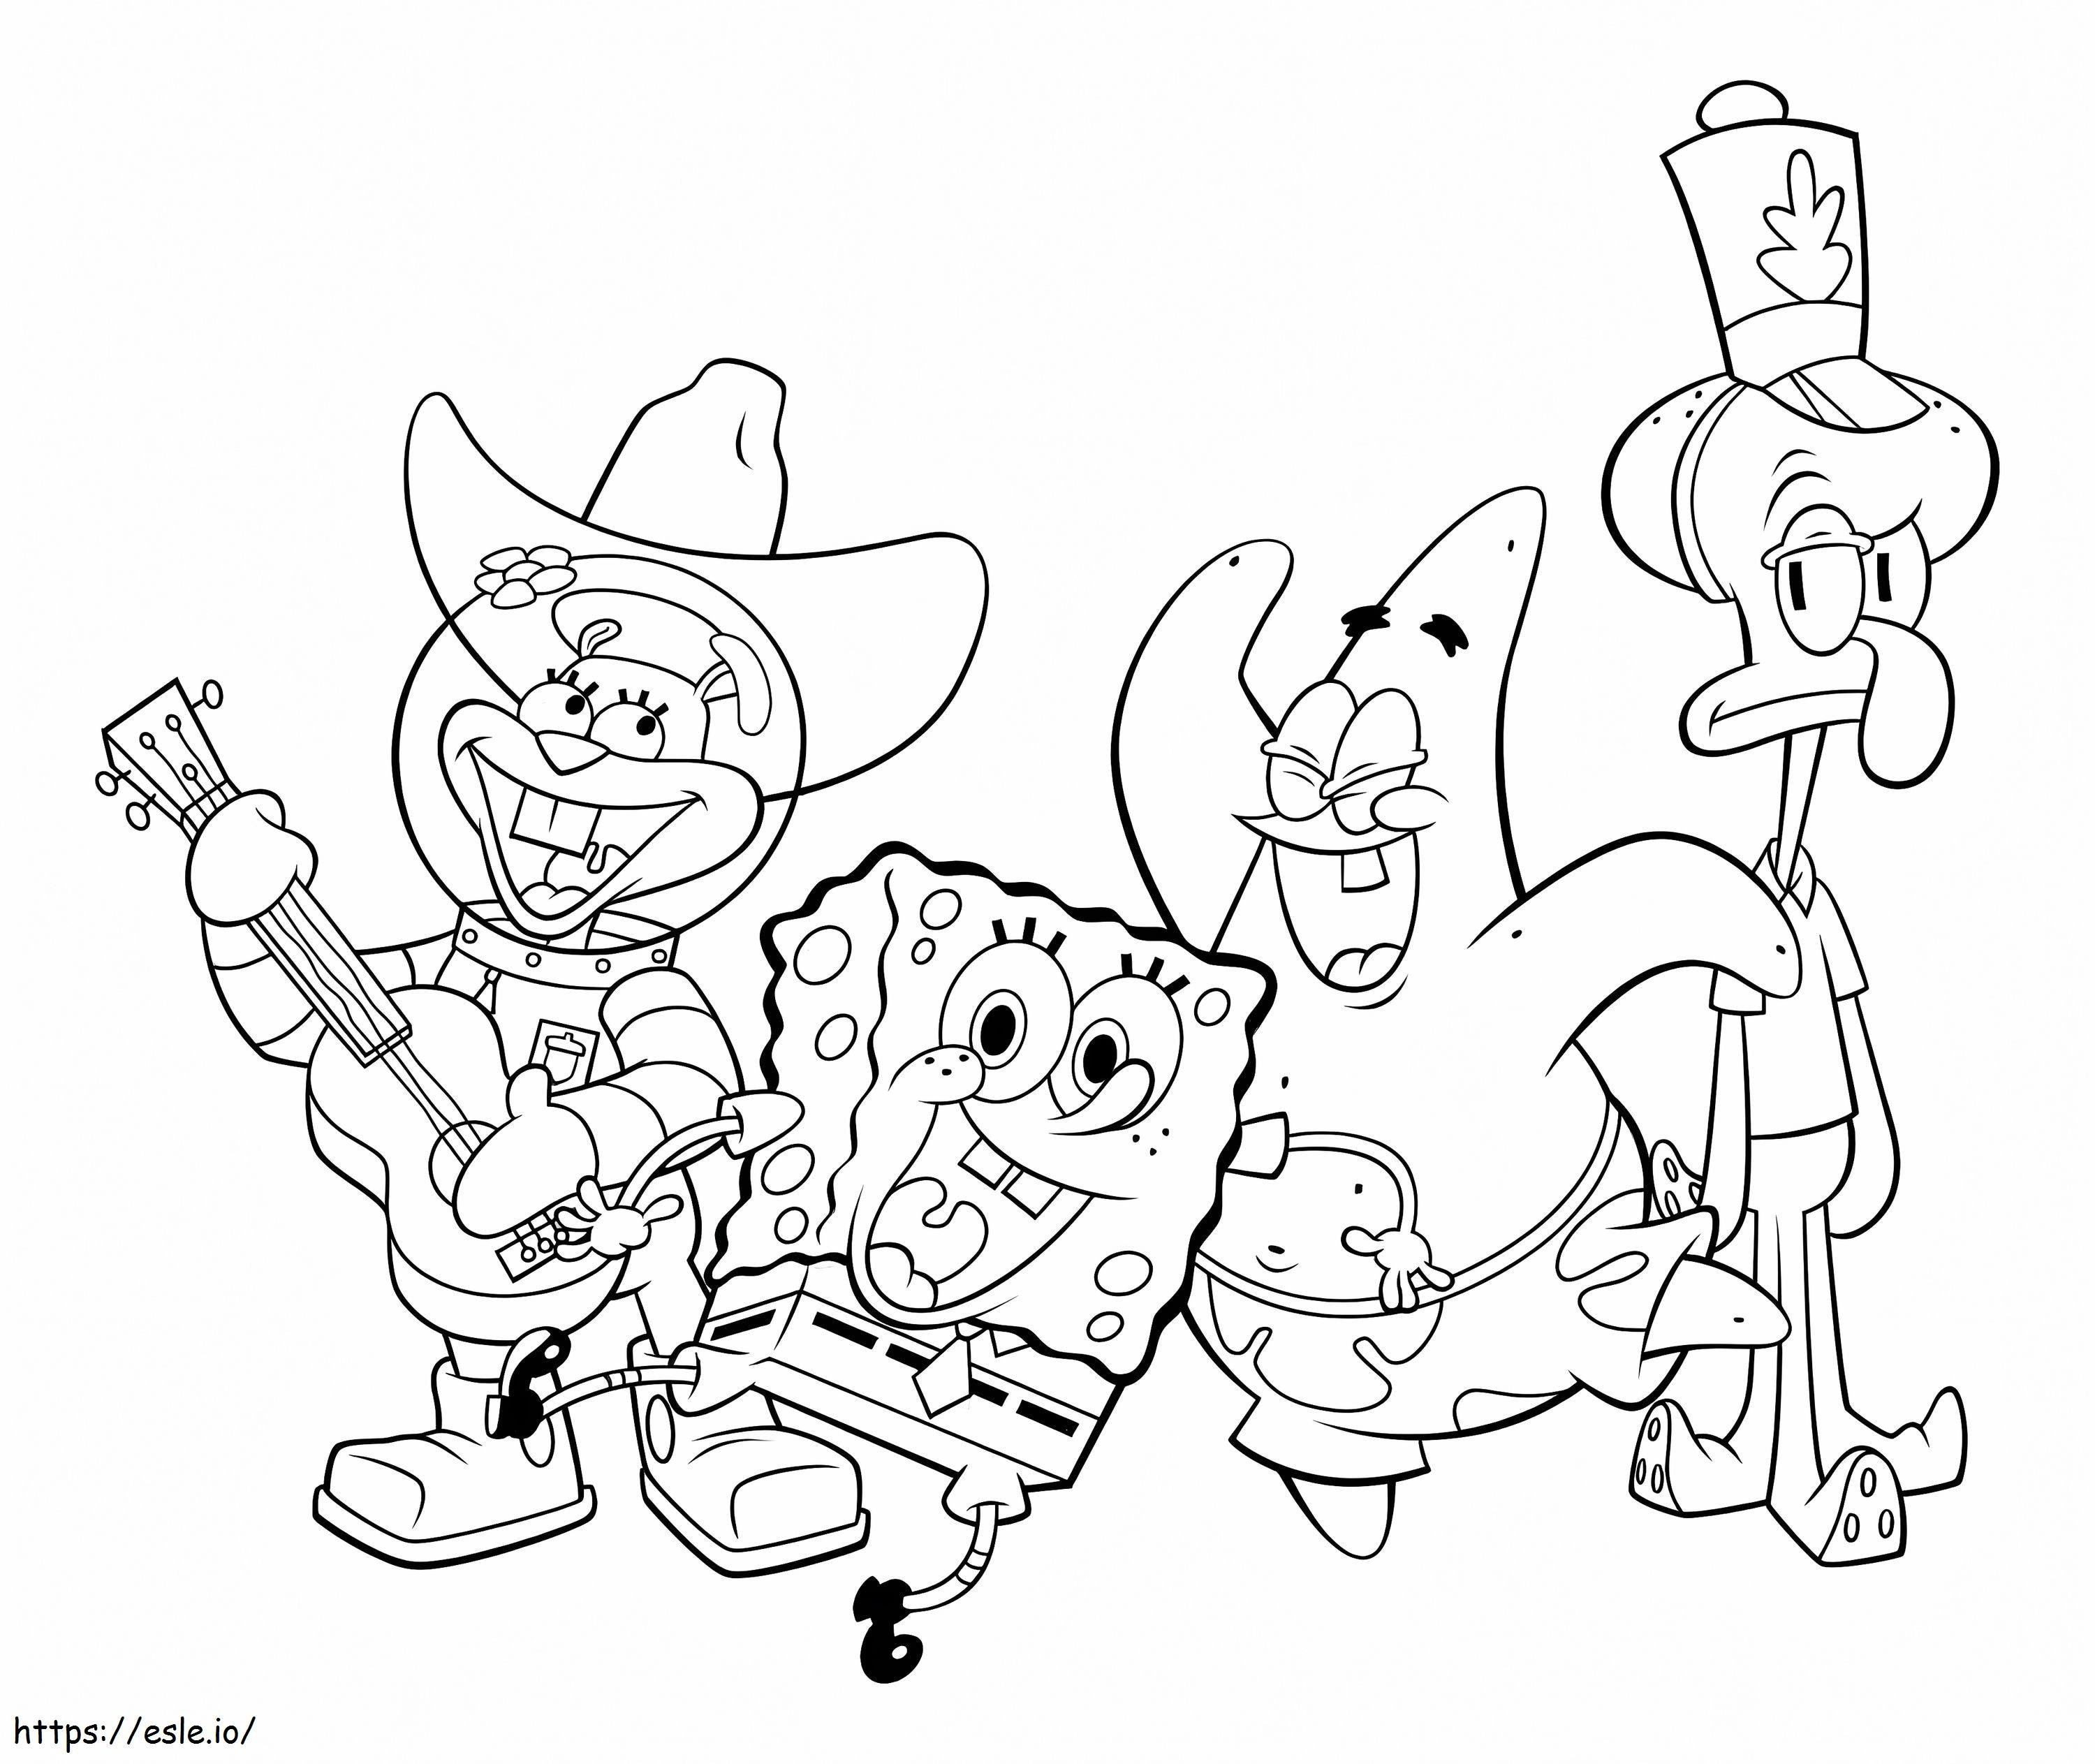 Spongebob Sandy Cheeks coloring page